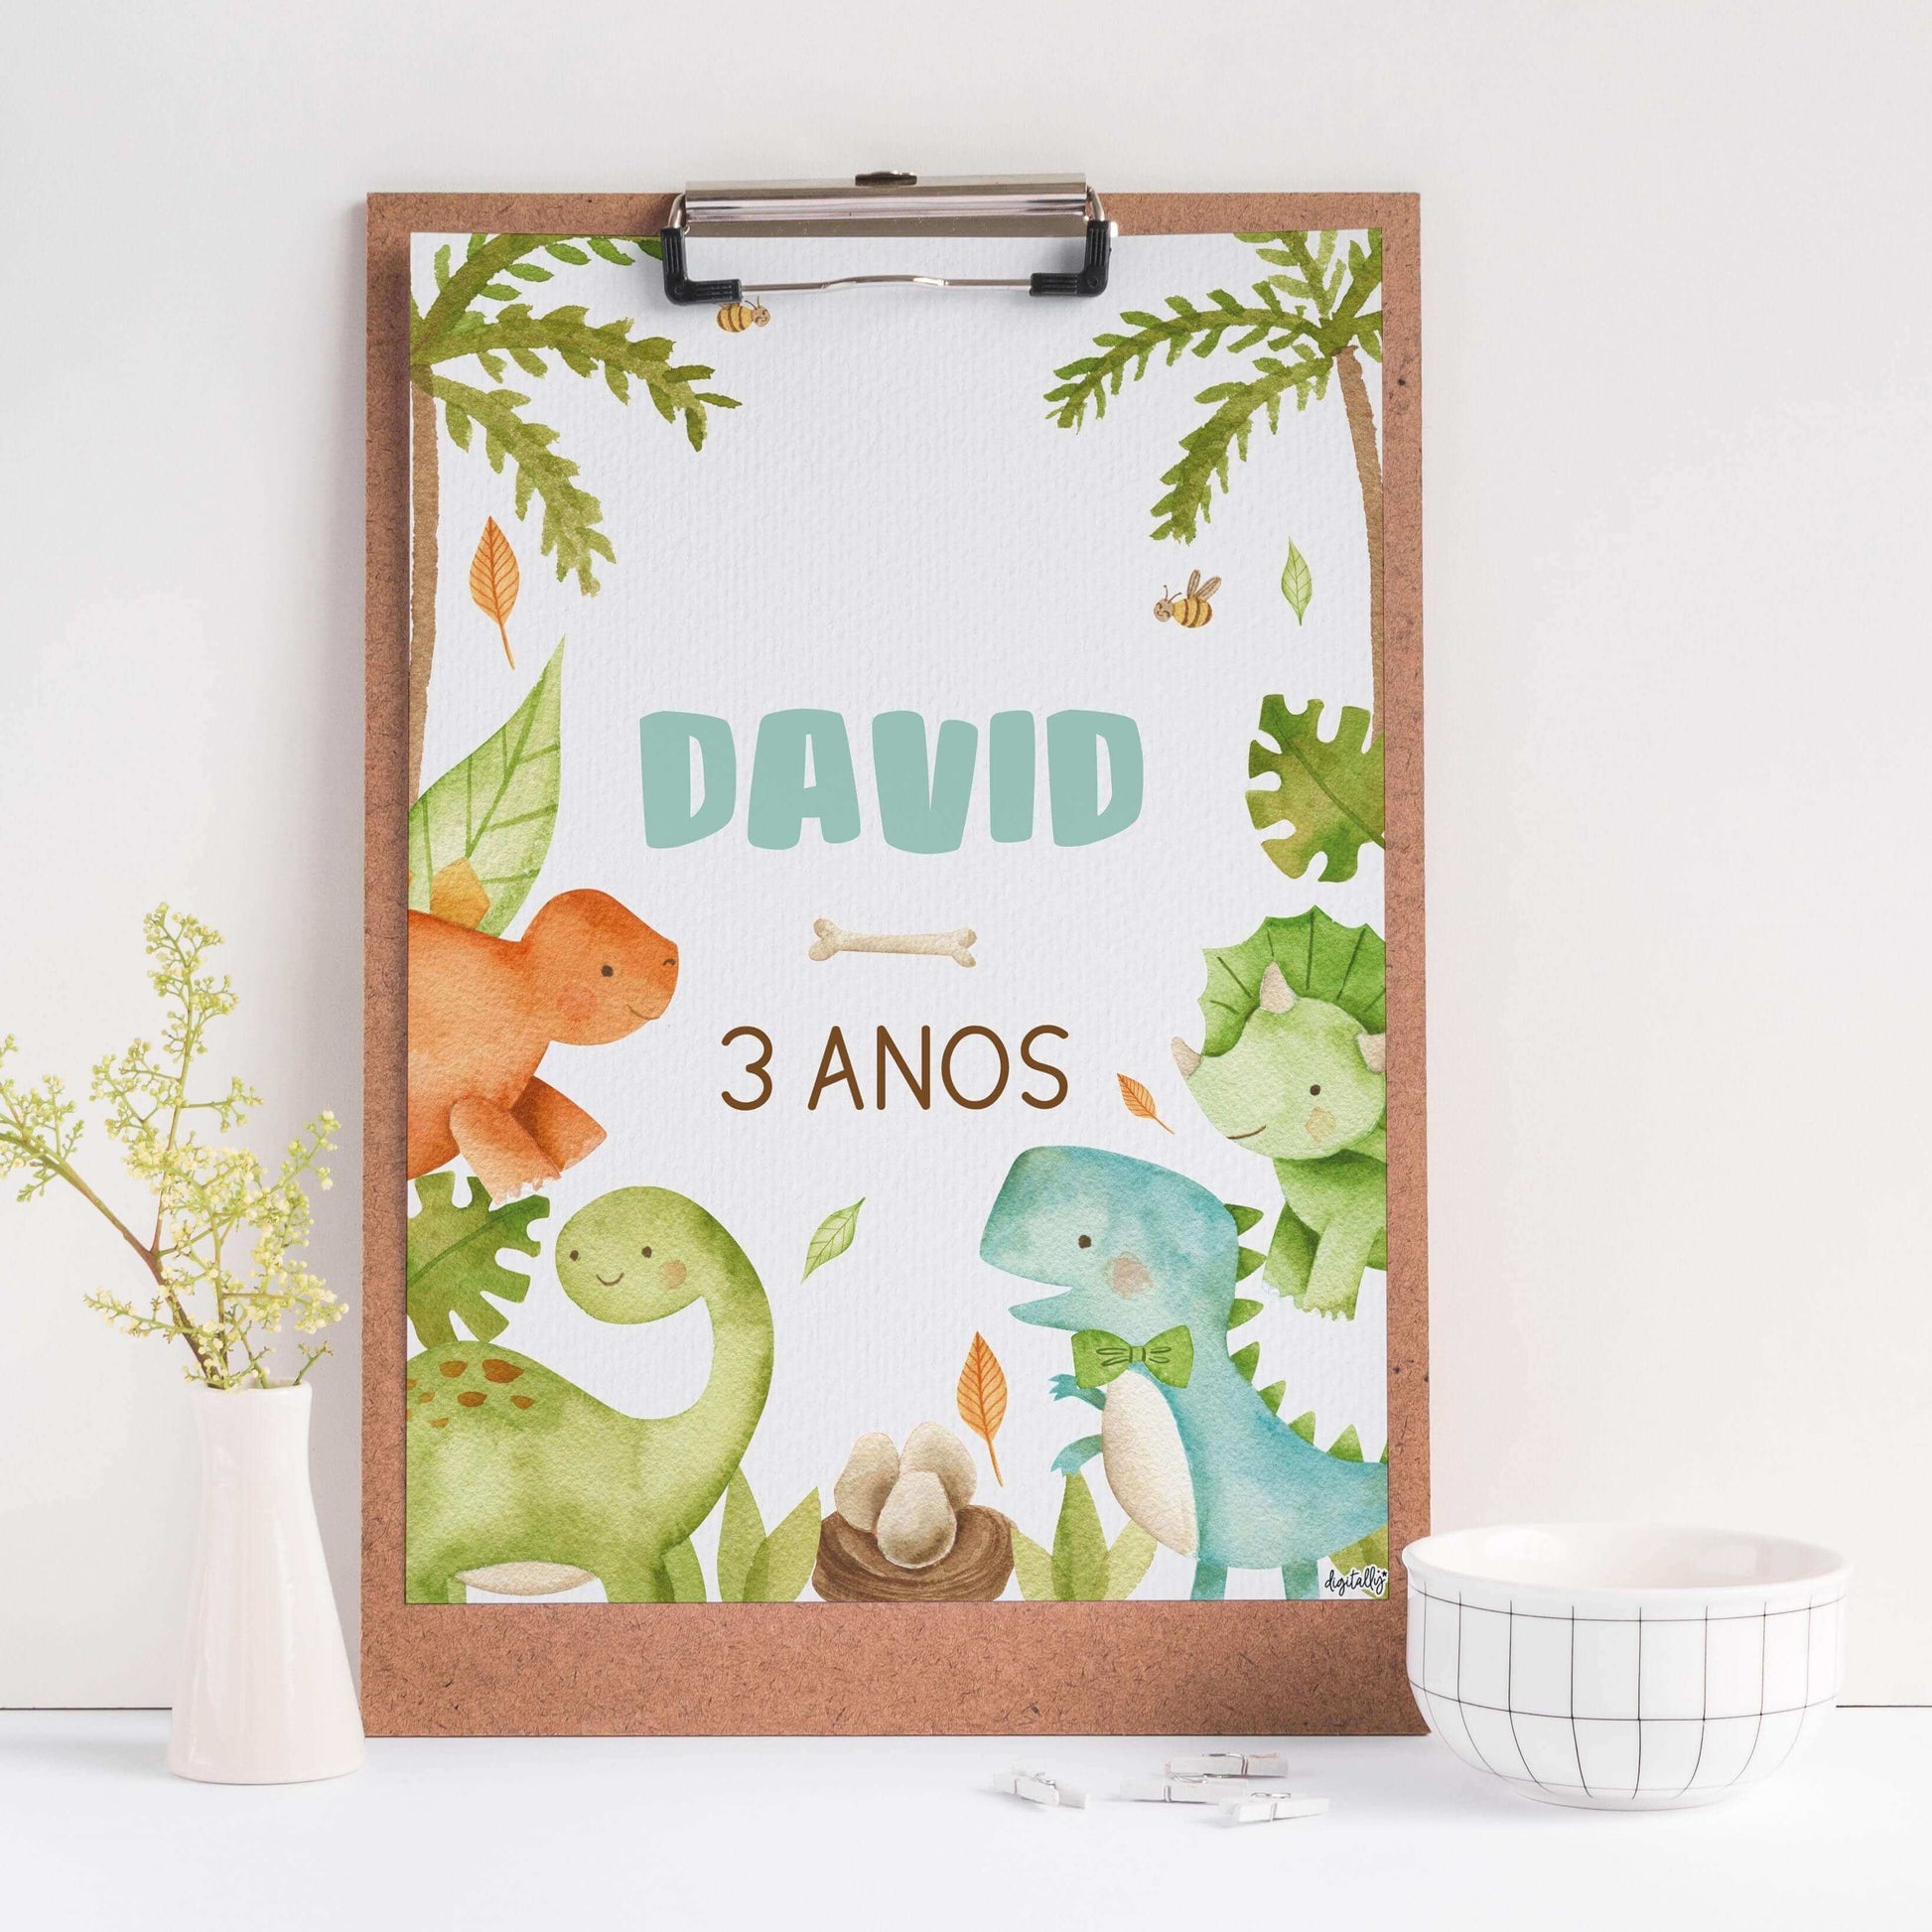 Baby Dinosaur Birthday Bundle ★ Instant Download | Editable Text - Digitally Printables